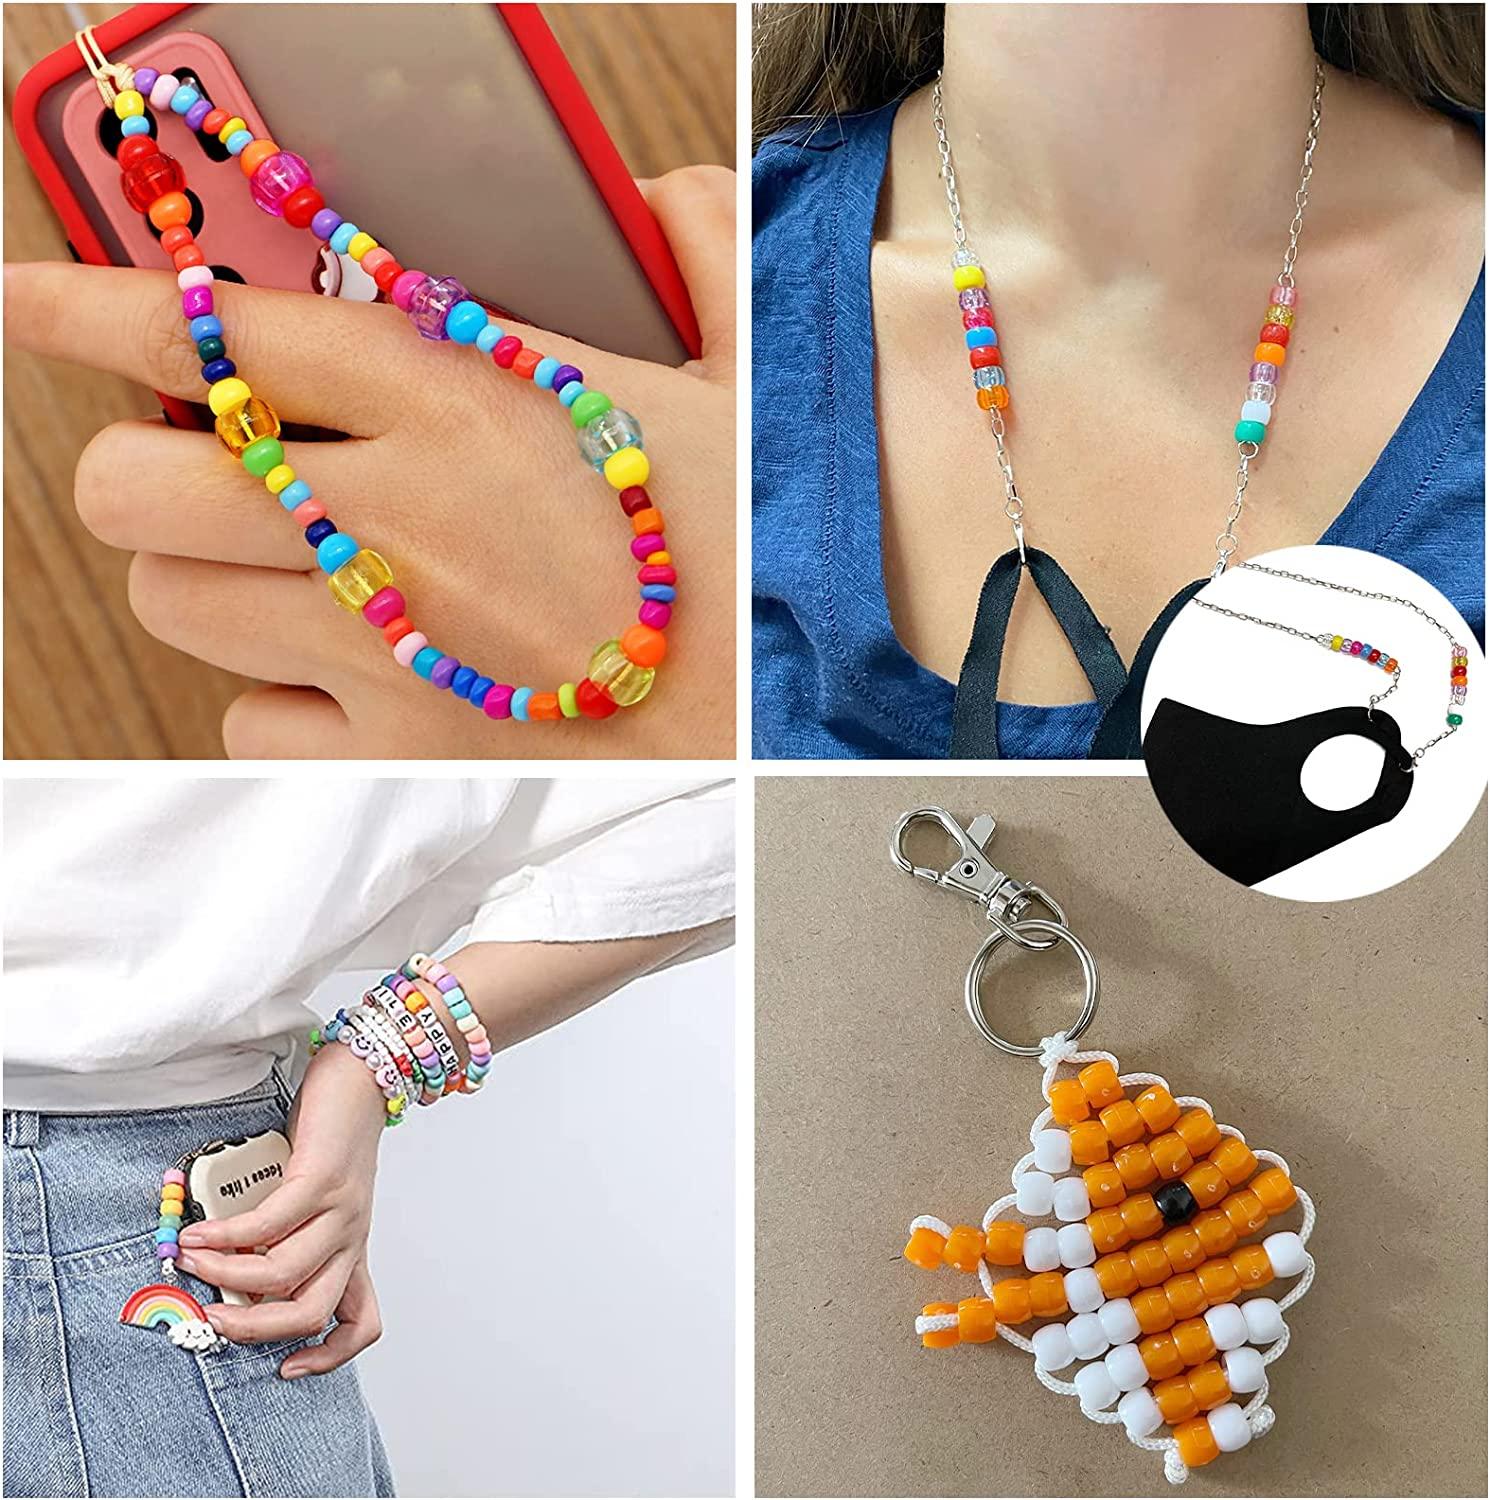 DIY - How to make Rainbow Loom Bracelet with your fingers - EASY TUTORIAL -  Friendship Bracelet - YouTube